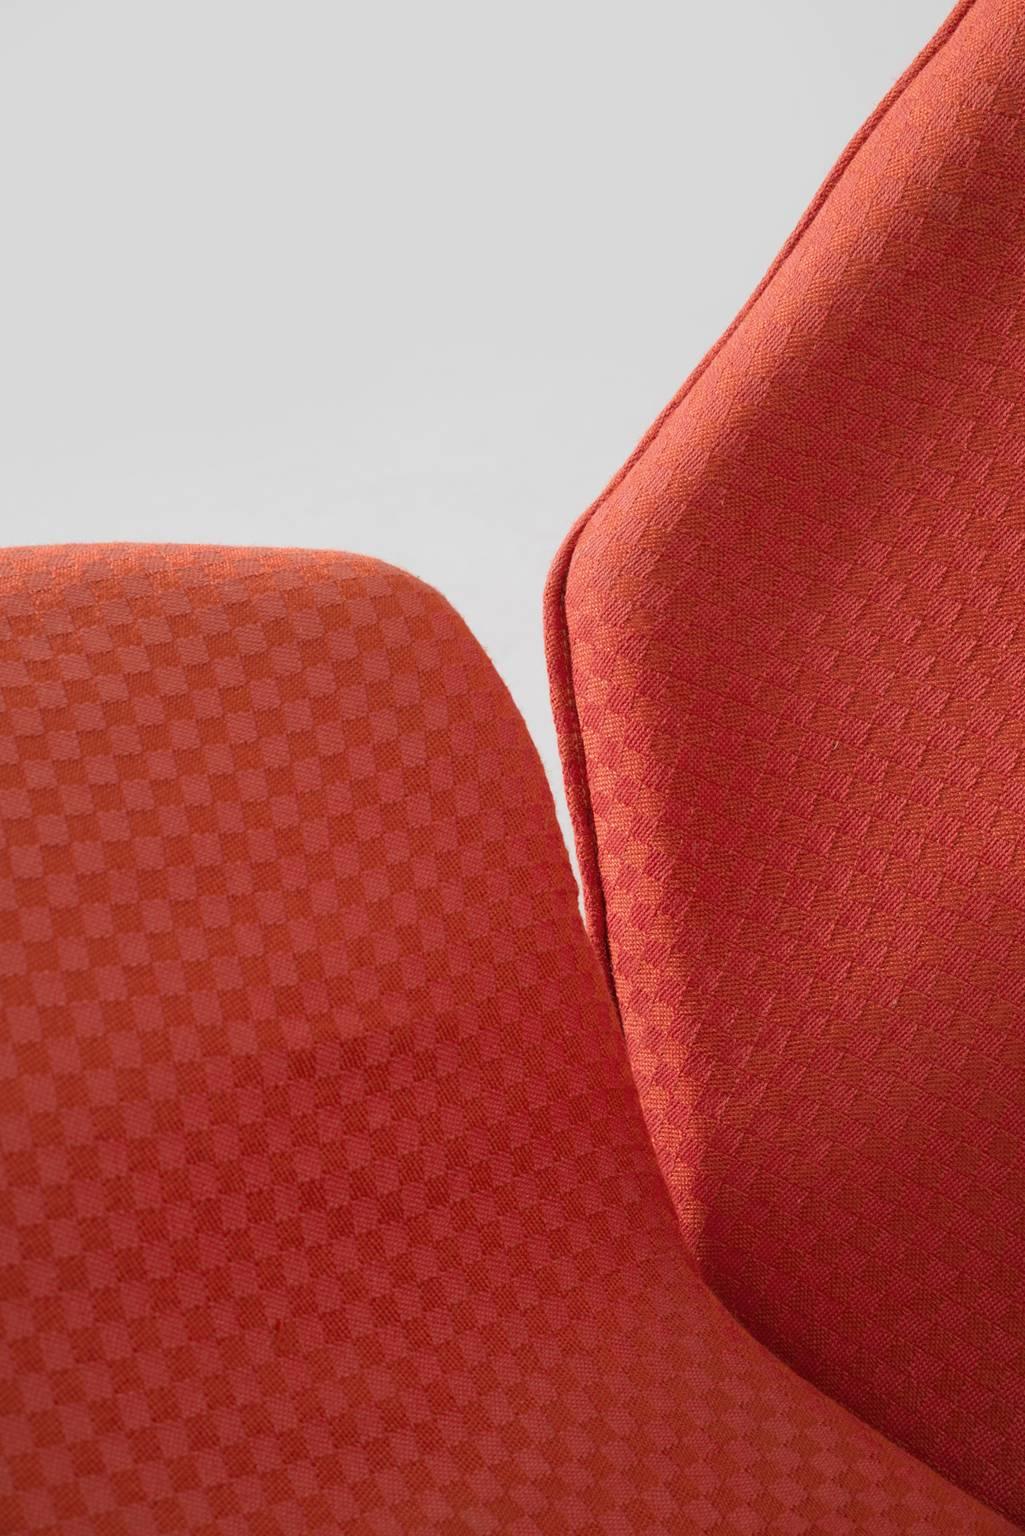 Augusto Bozzi Adjustable Orange Lounge Chair for Saporiti 1